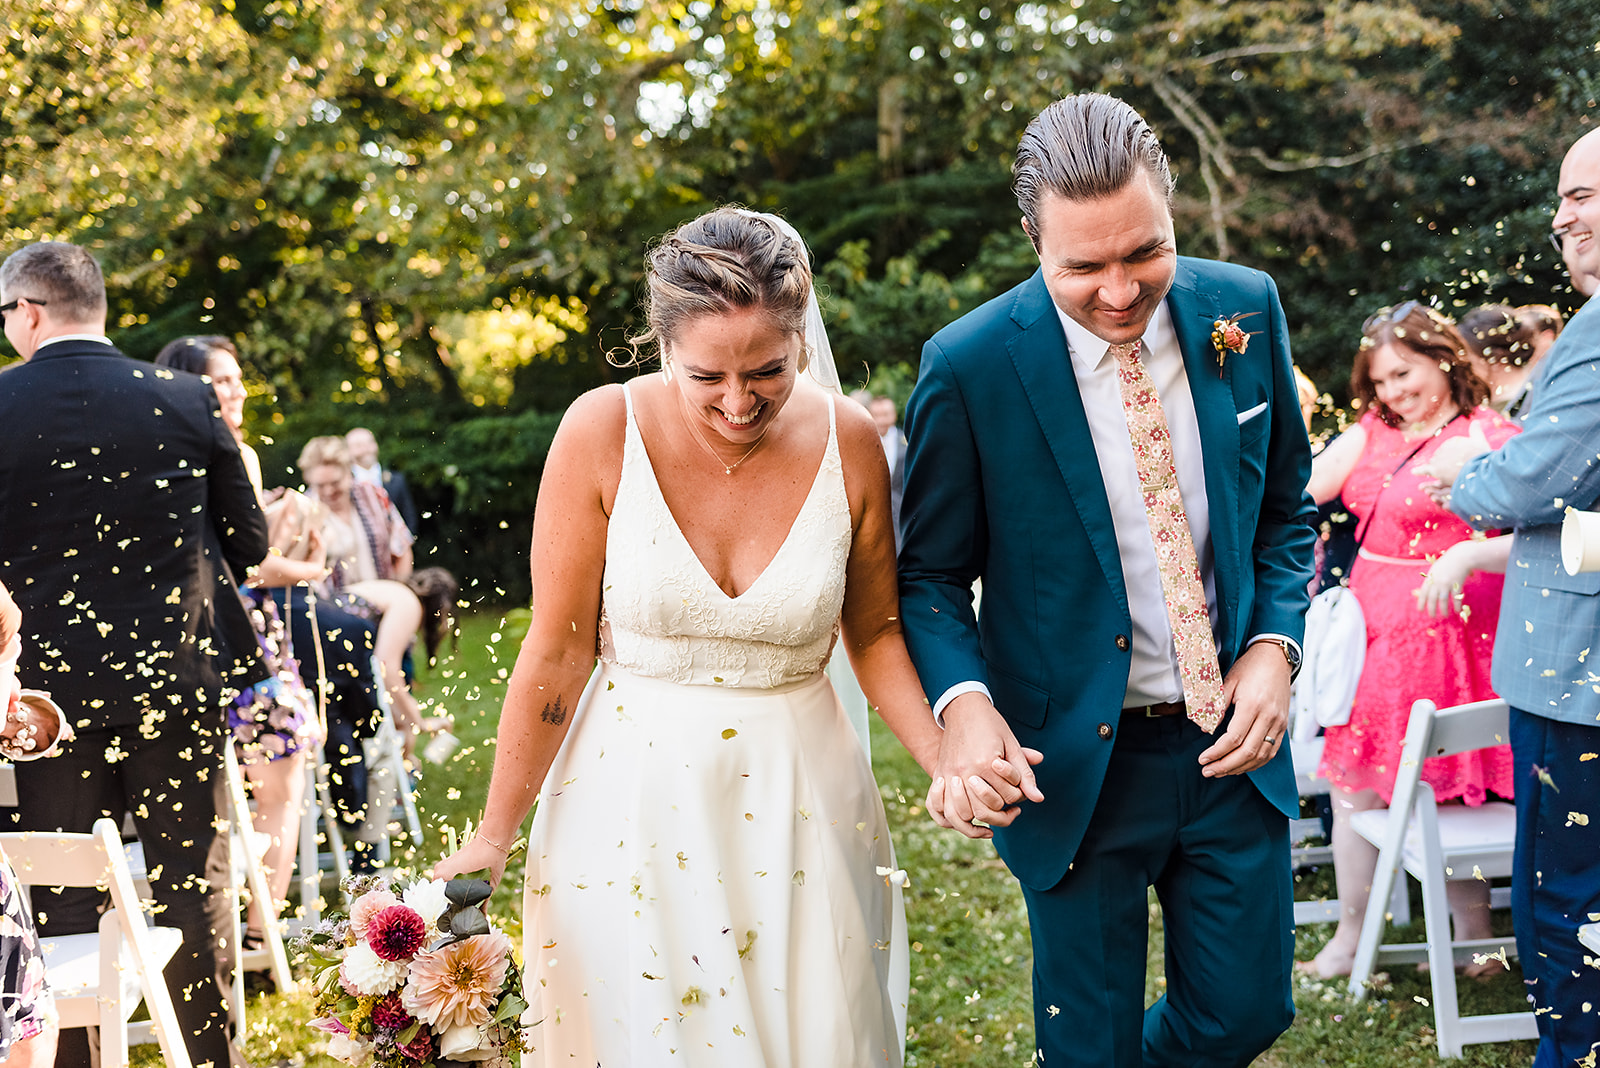 Bride and groom exiting Awbury Arboretum wedding ceremony under shower of eco-friendly dried flower confetti